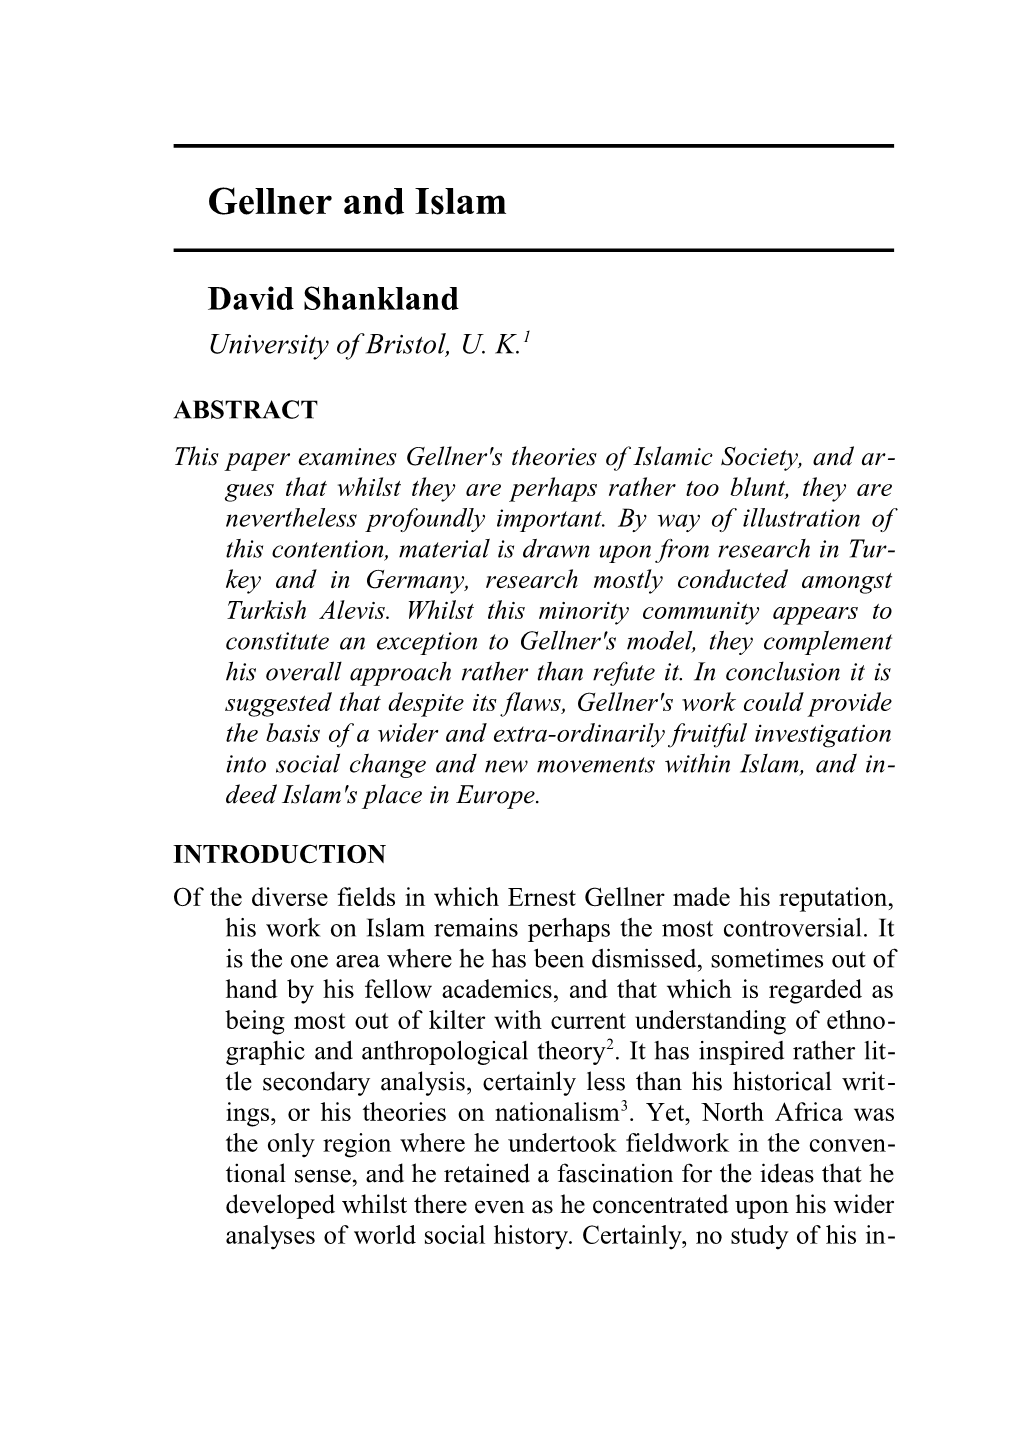 Shankland / Gellner and Islam